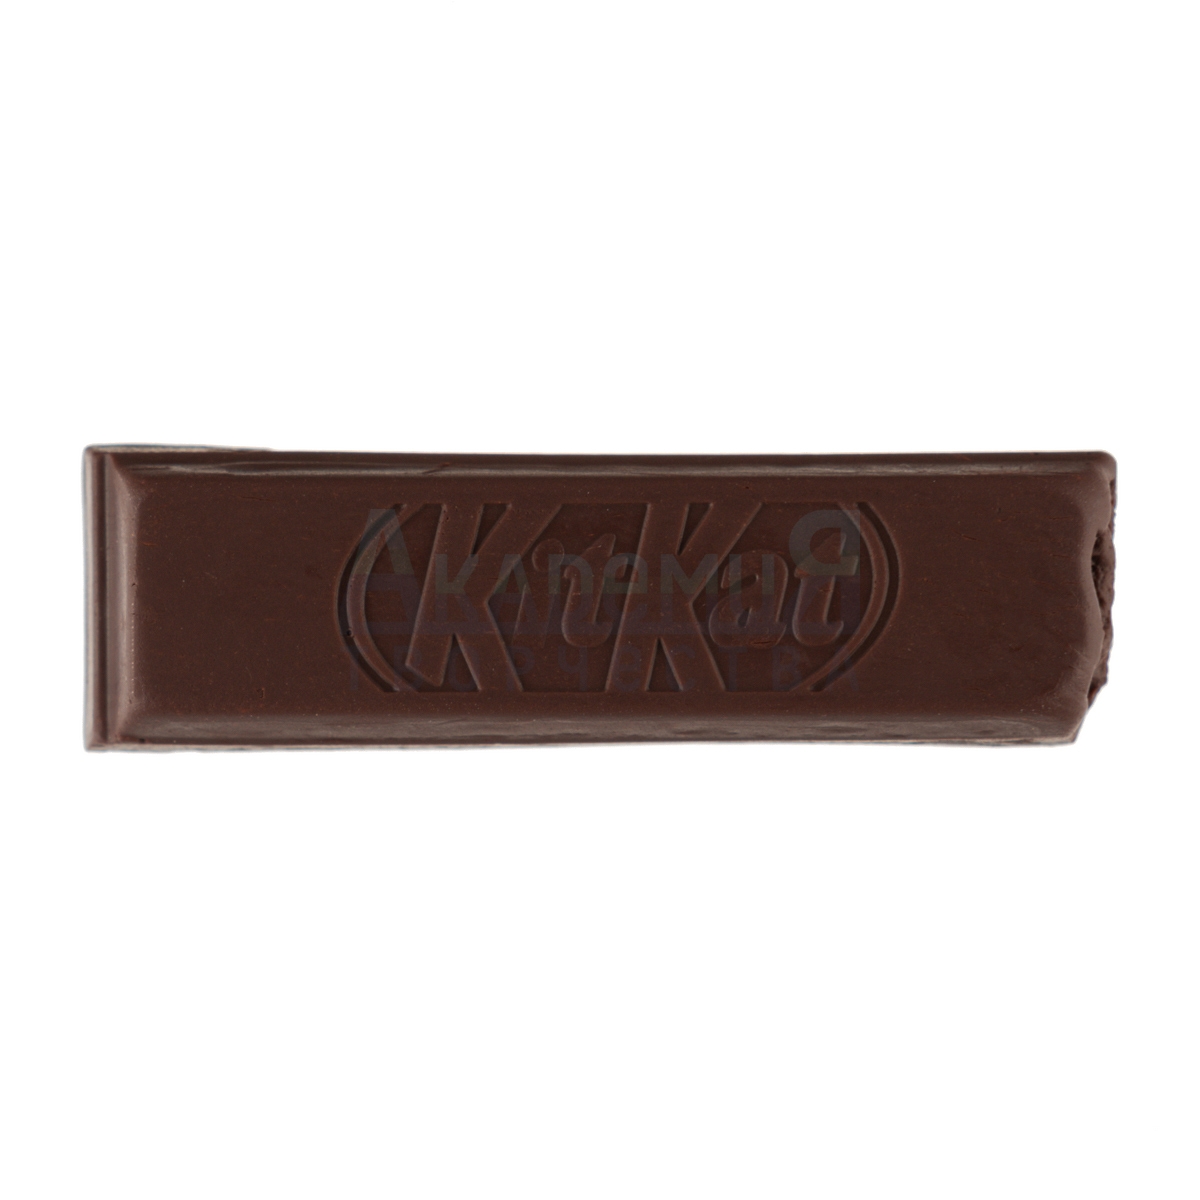   Kit Kat